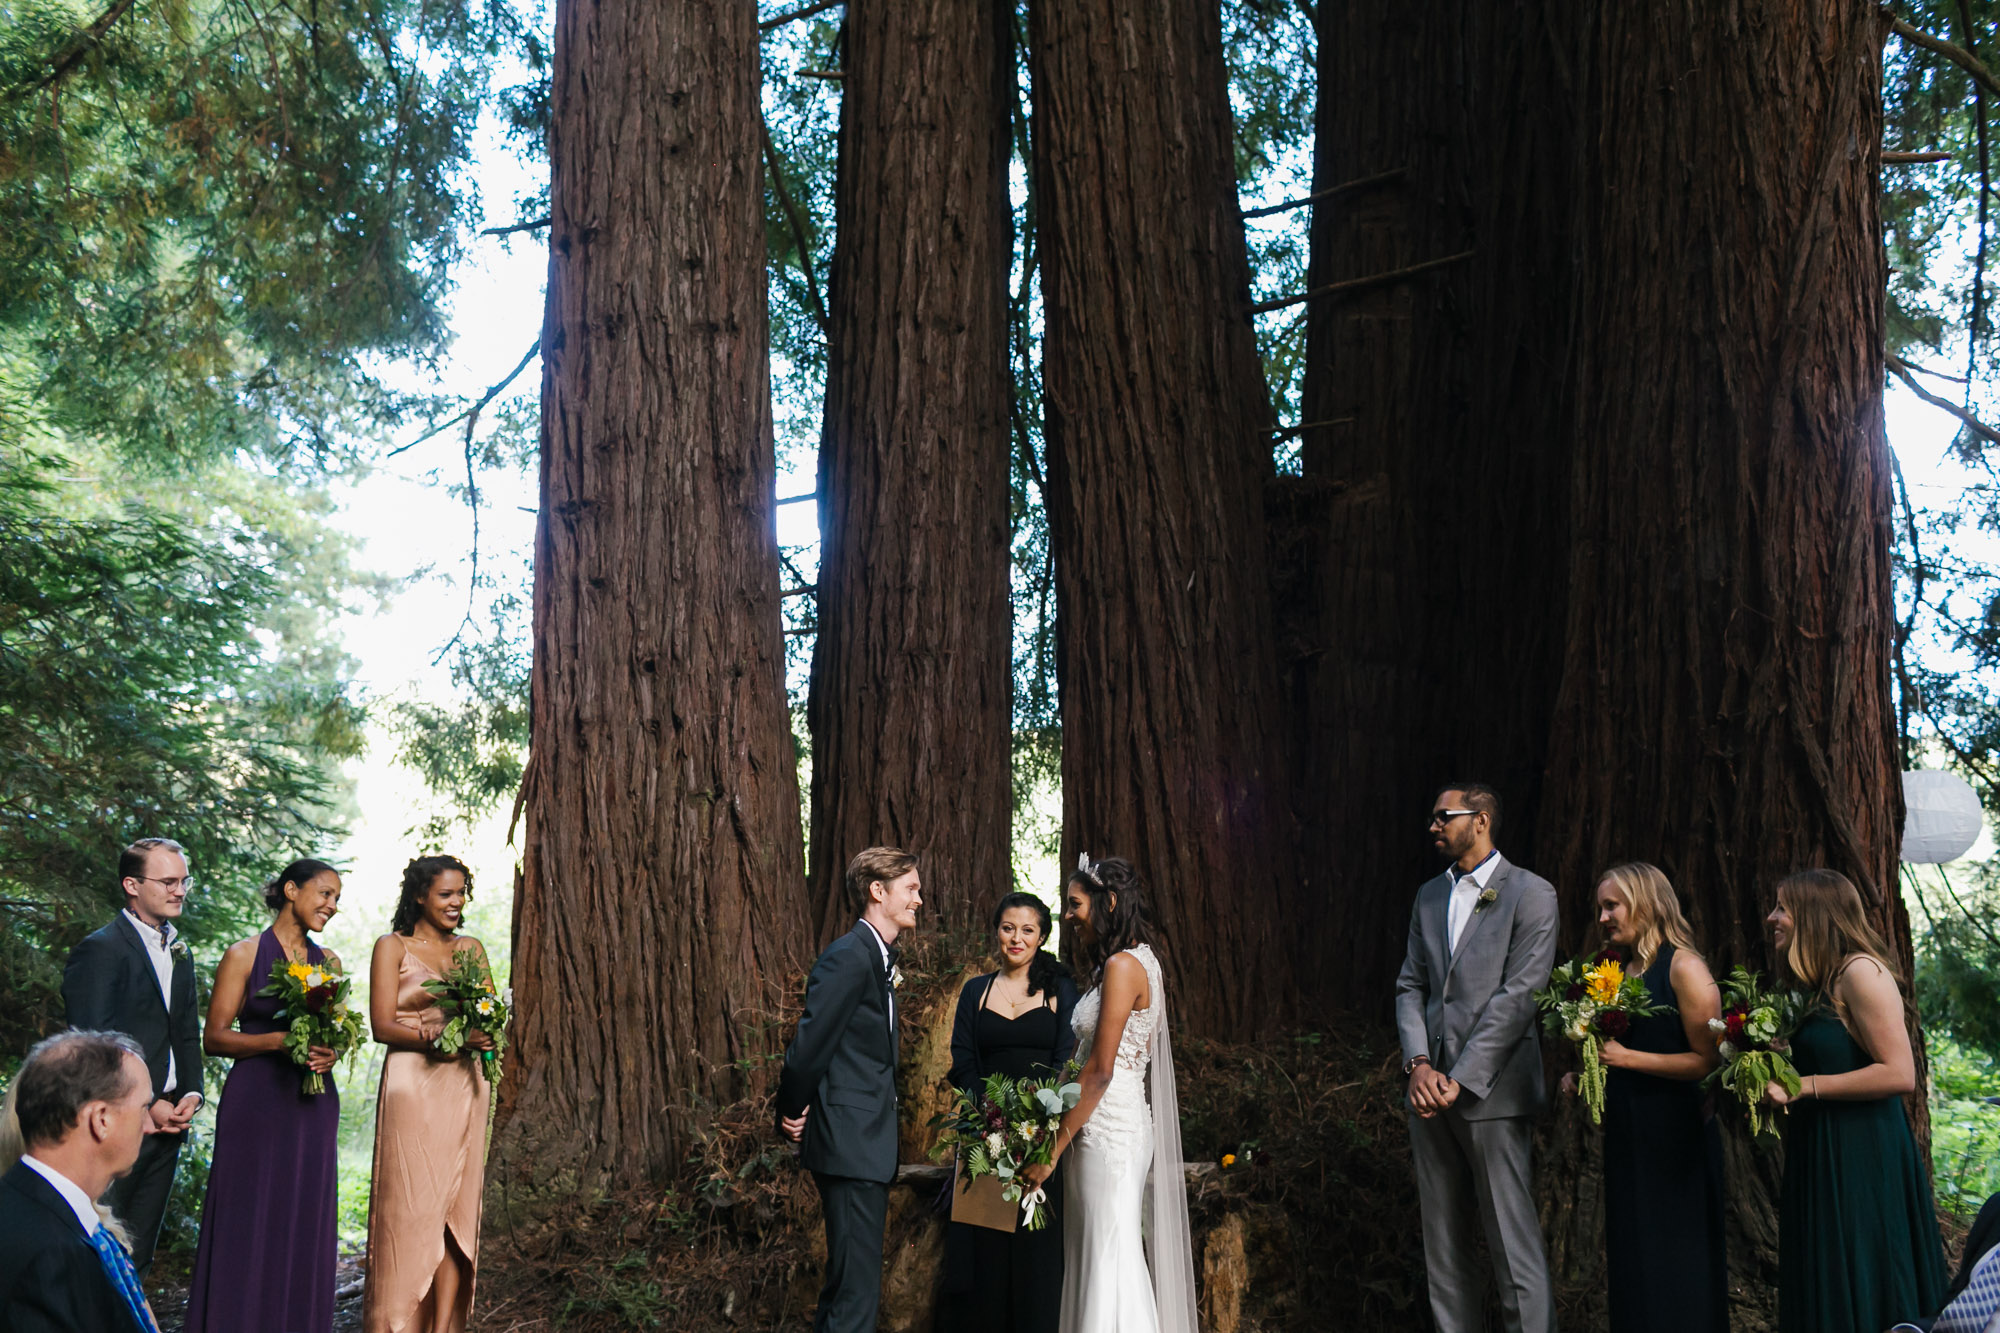 Wedding ceremony under giant redwood trees on a California farm